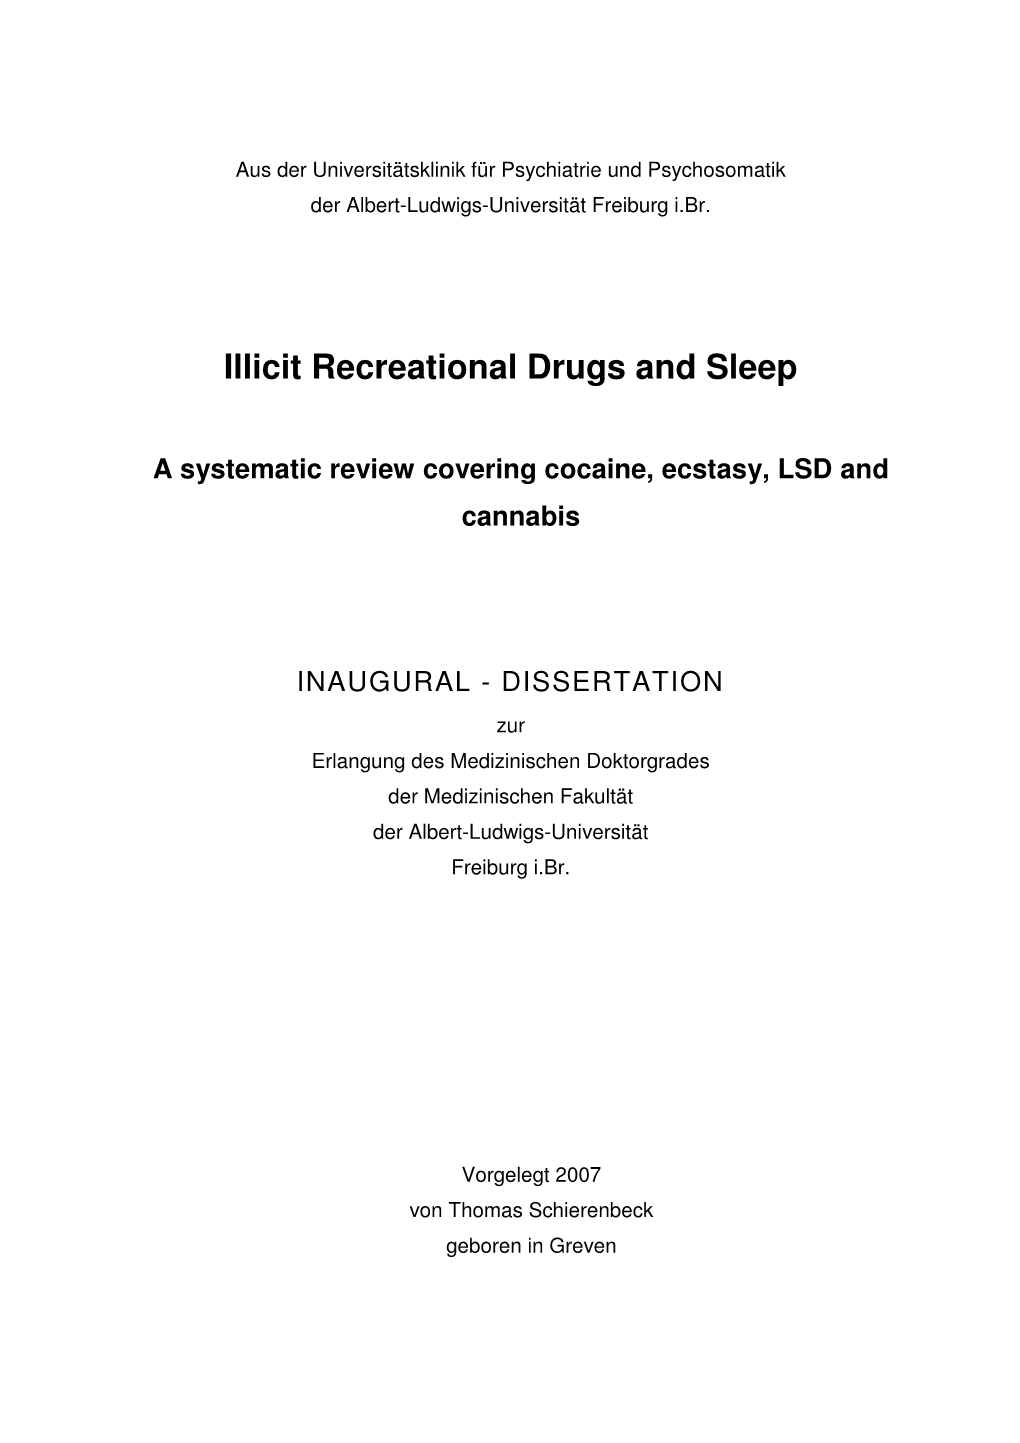 Illicit Recreational Drugs and Sleep